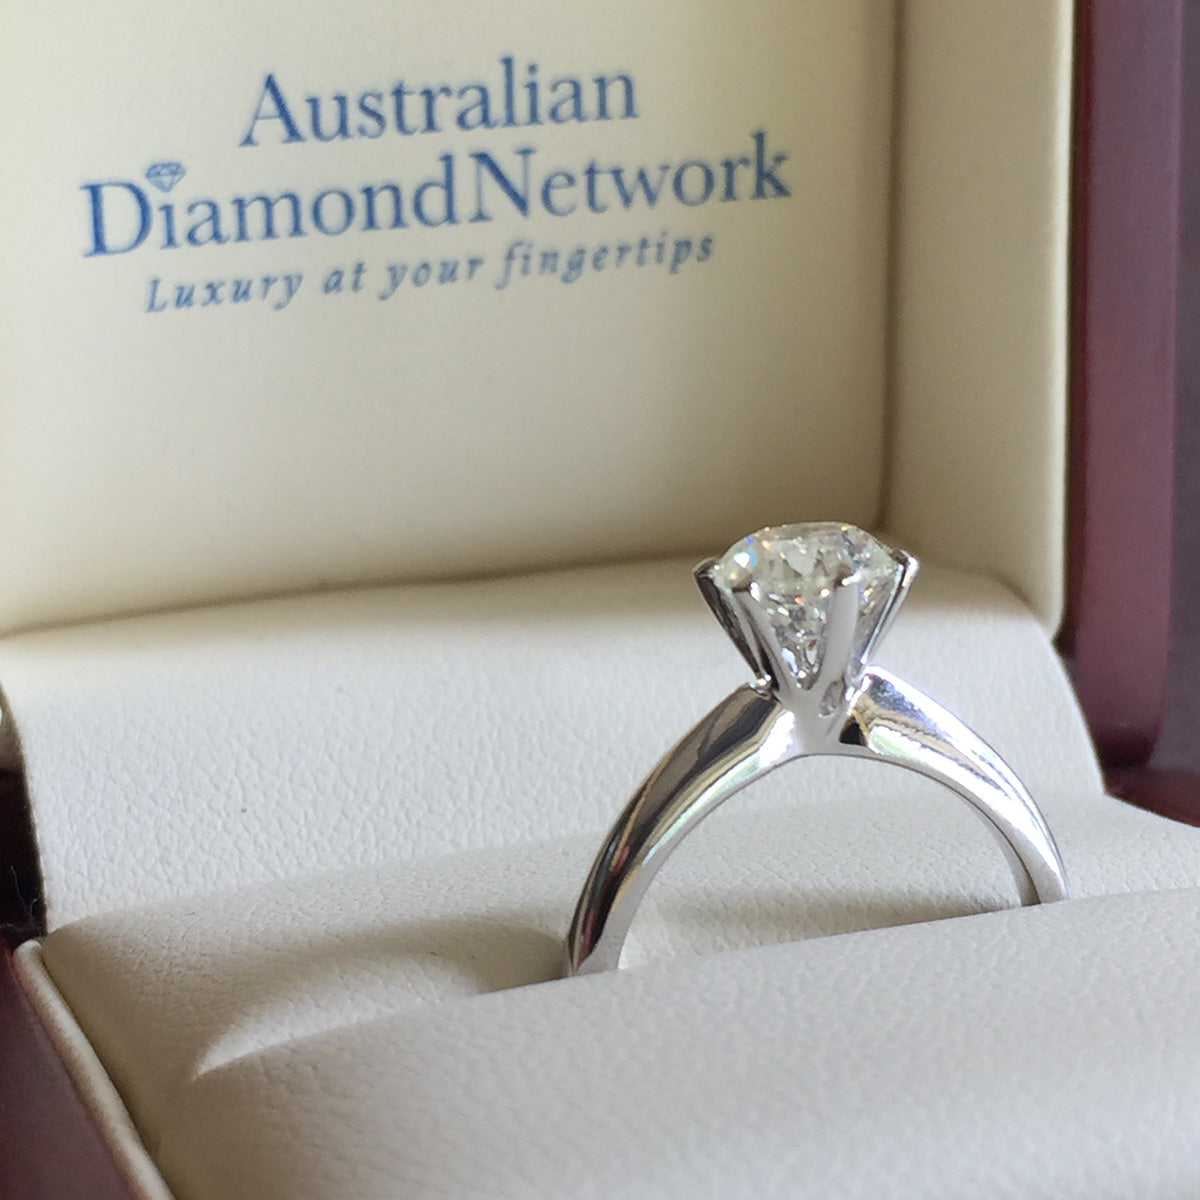 1 carat solitaire diamond engagement ring - Australian Diamond Network